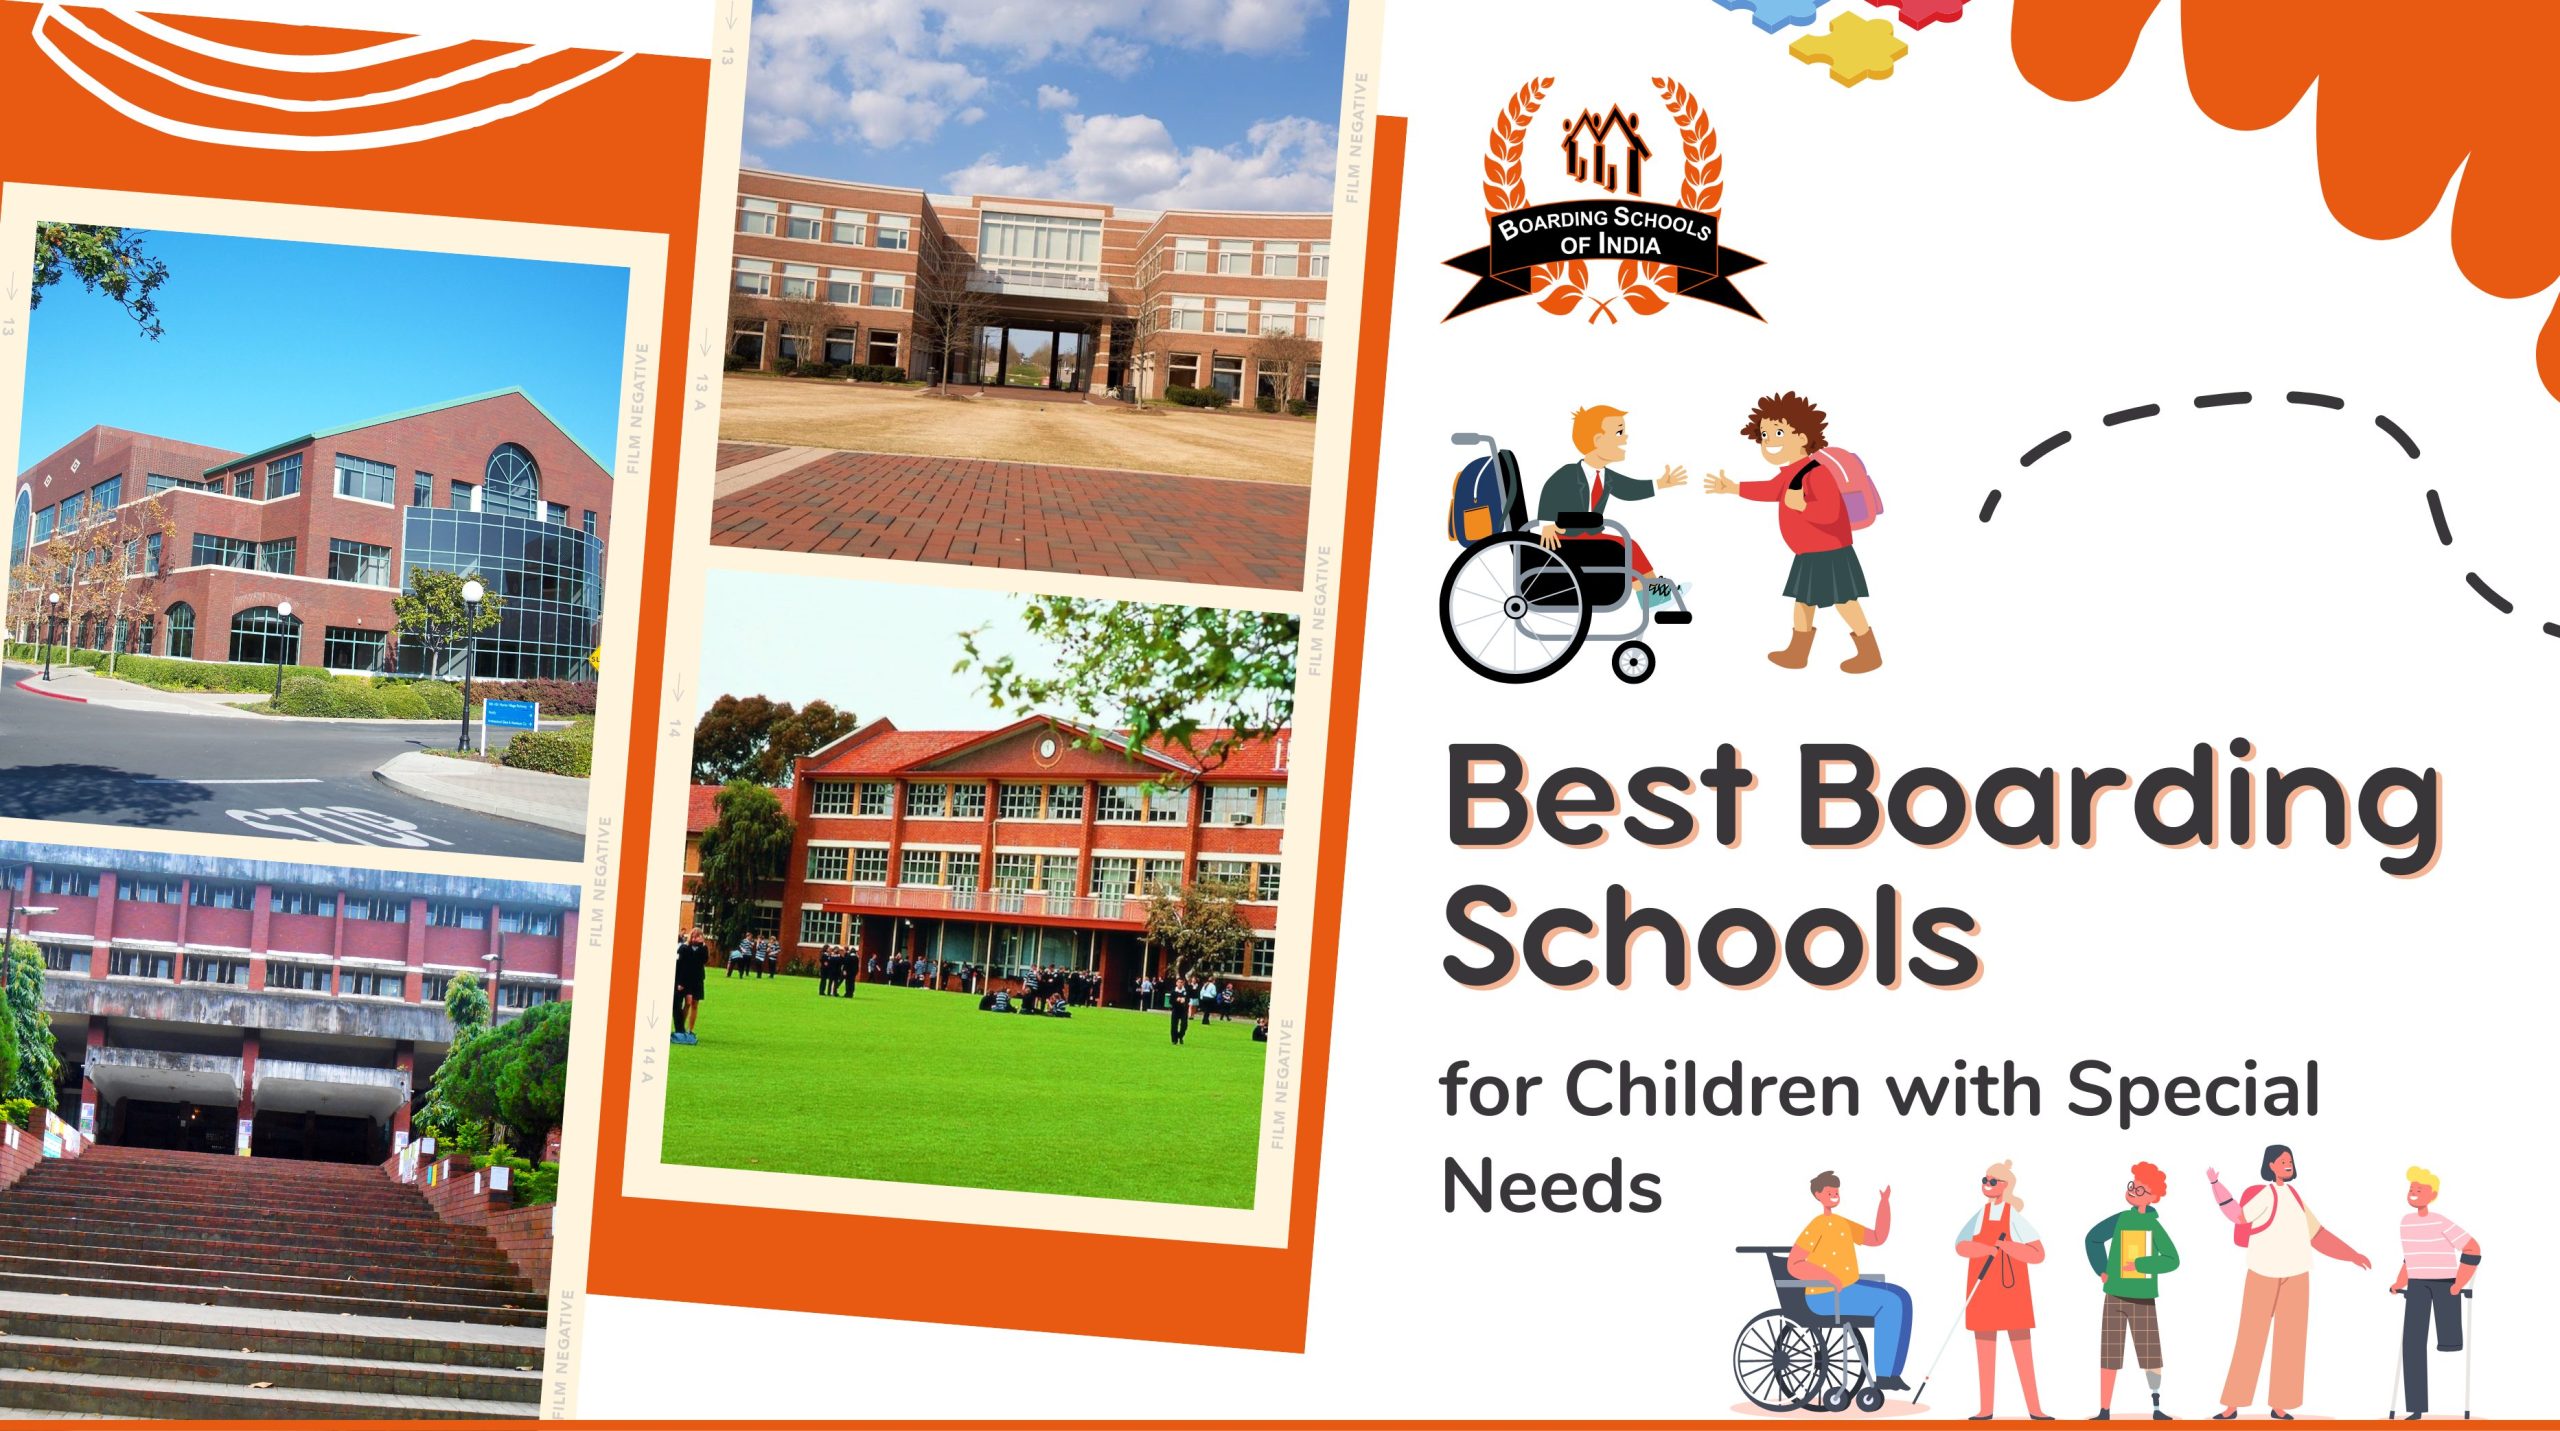 Best Boarding Schools for Children with Special Needs